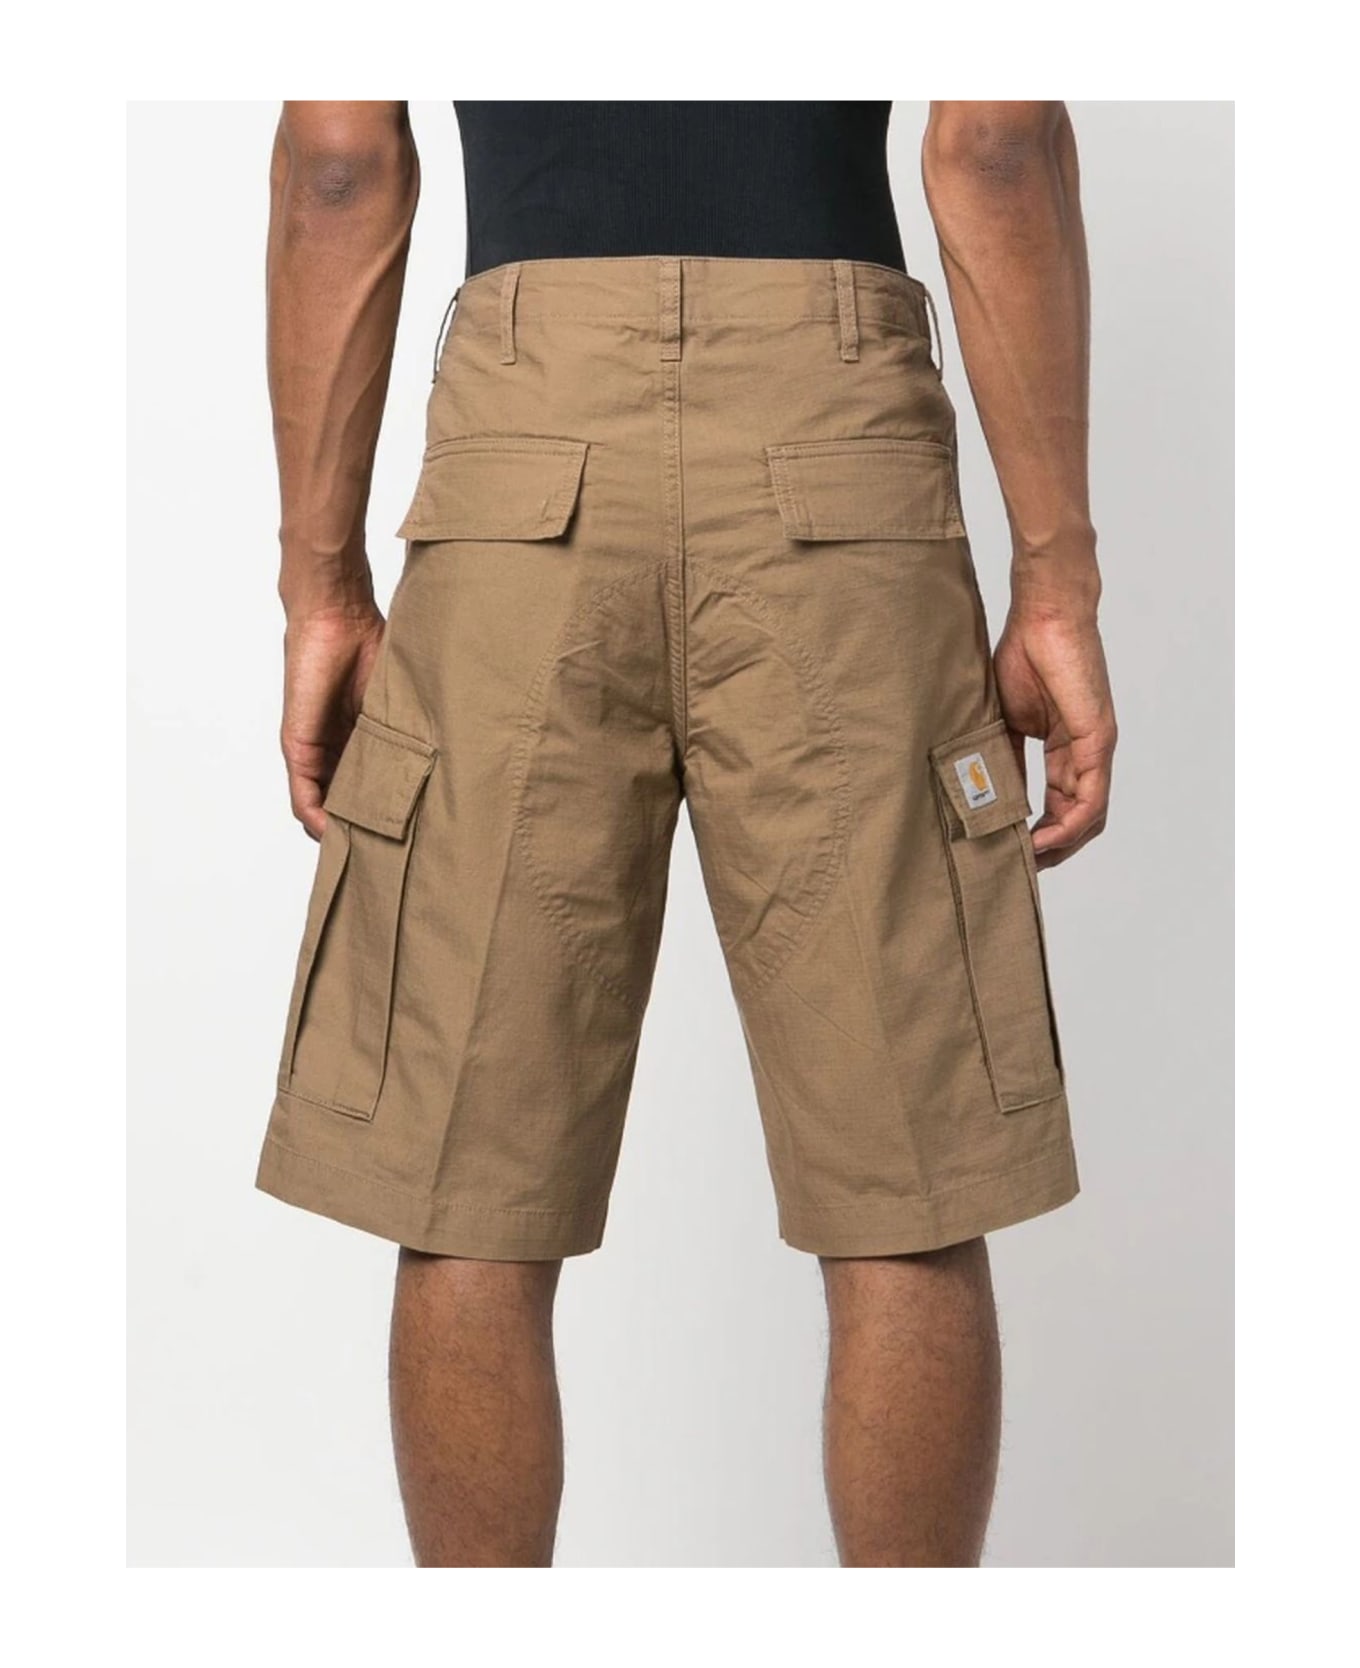 Carhartt Light Brown Cotton Cargo Shorts - Neutro